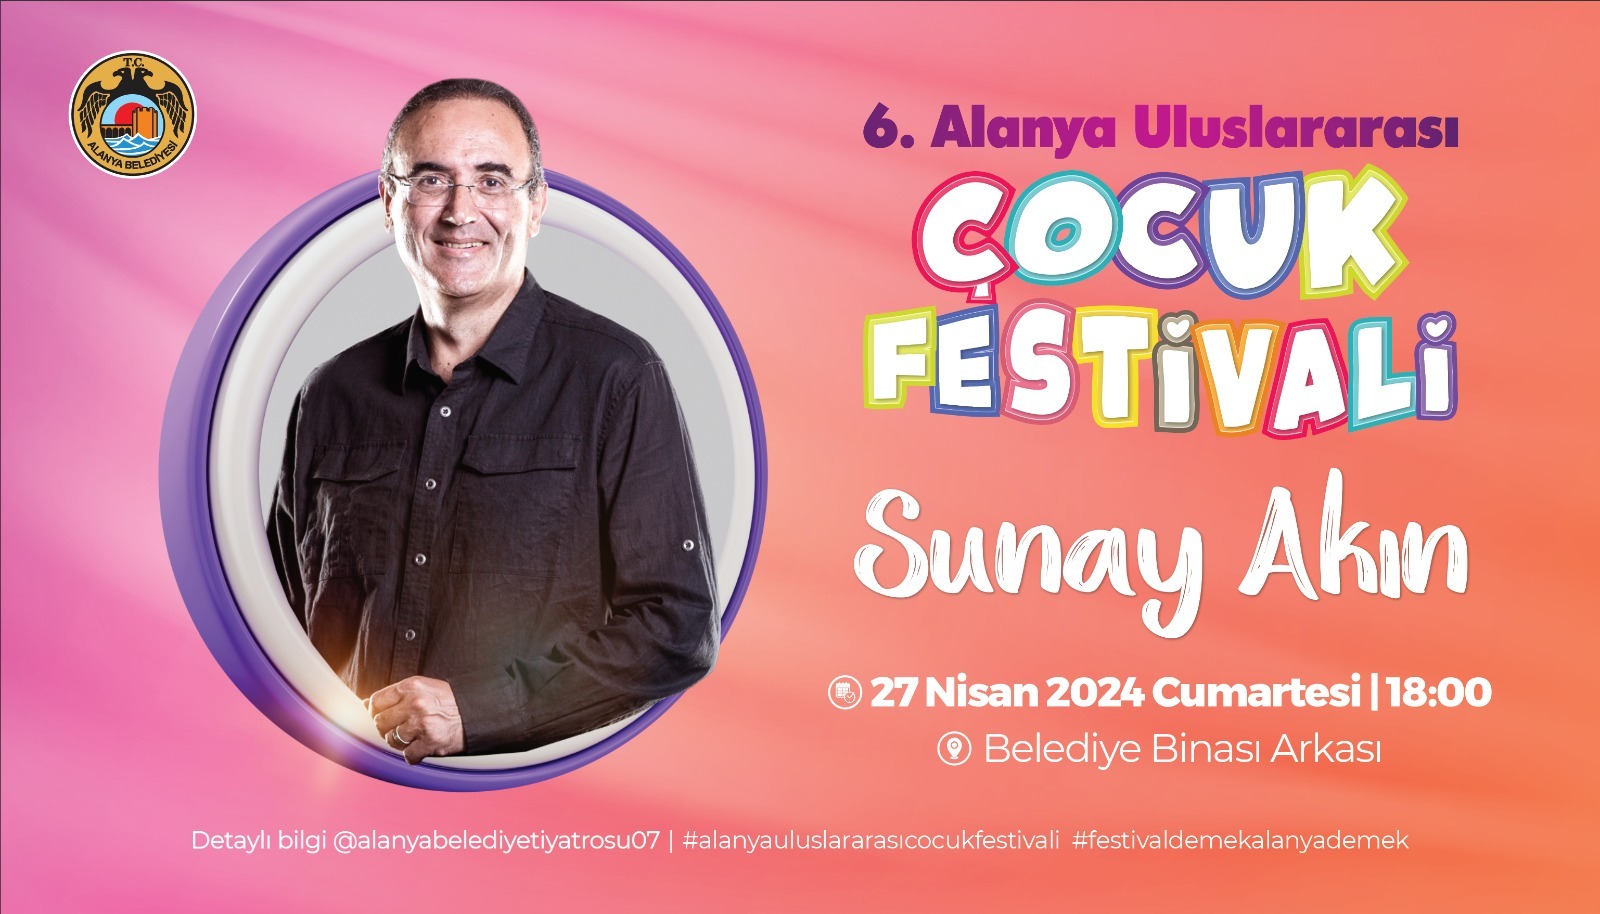 Alanya Uluslararasi Cocuk Festival